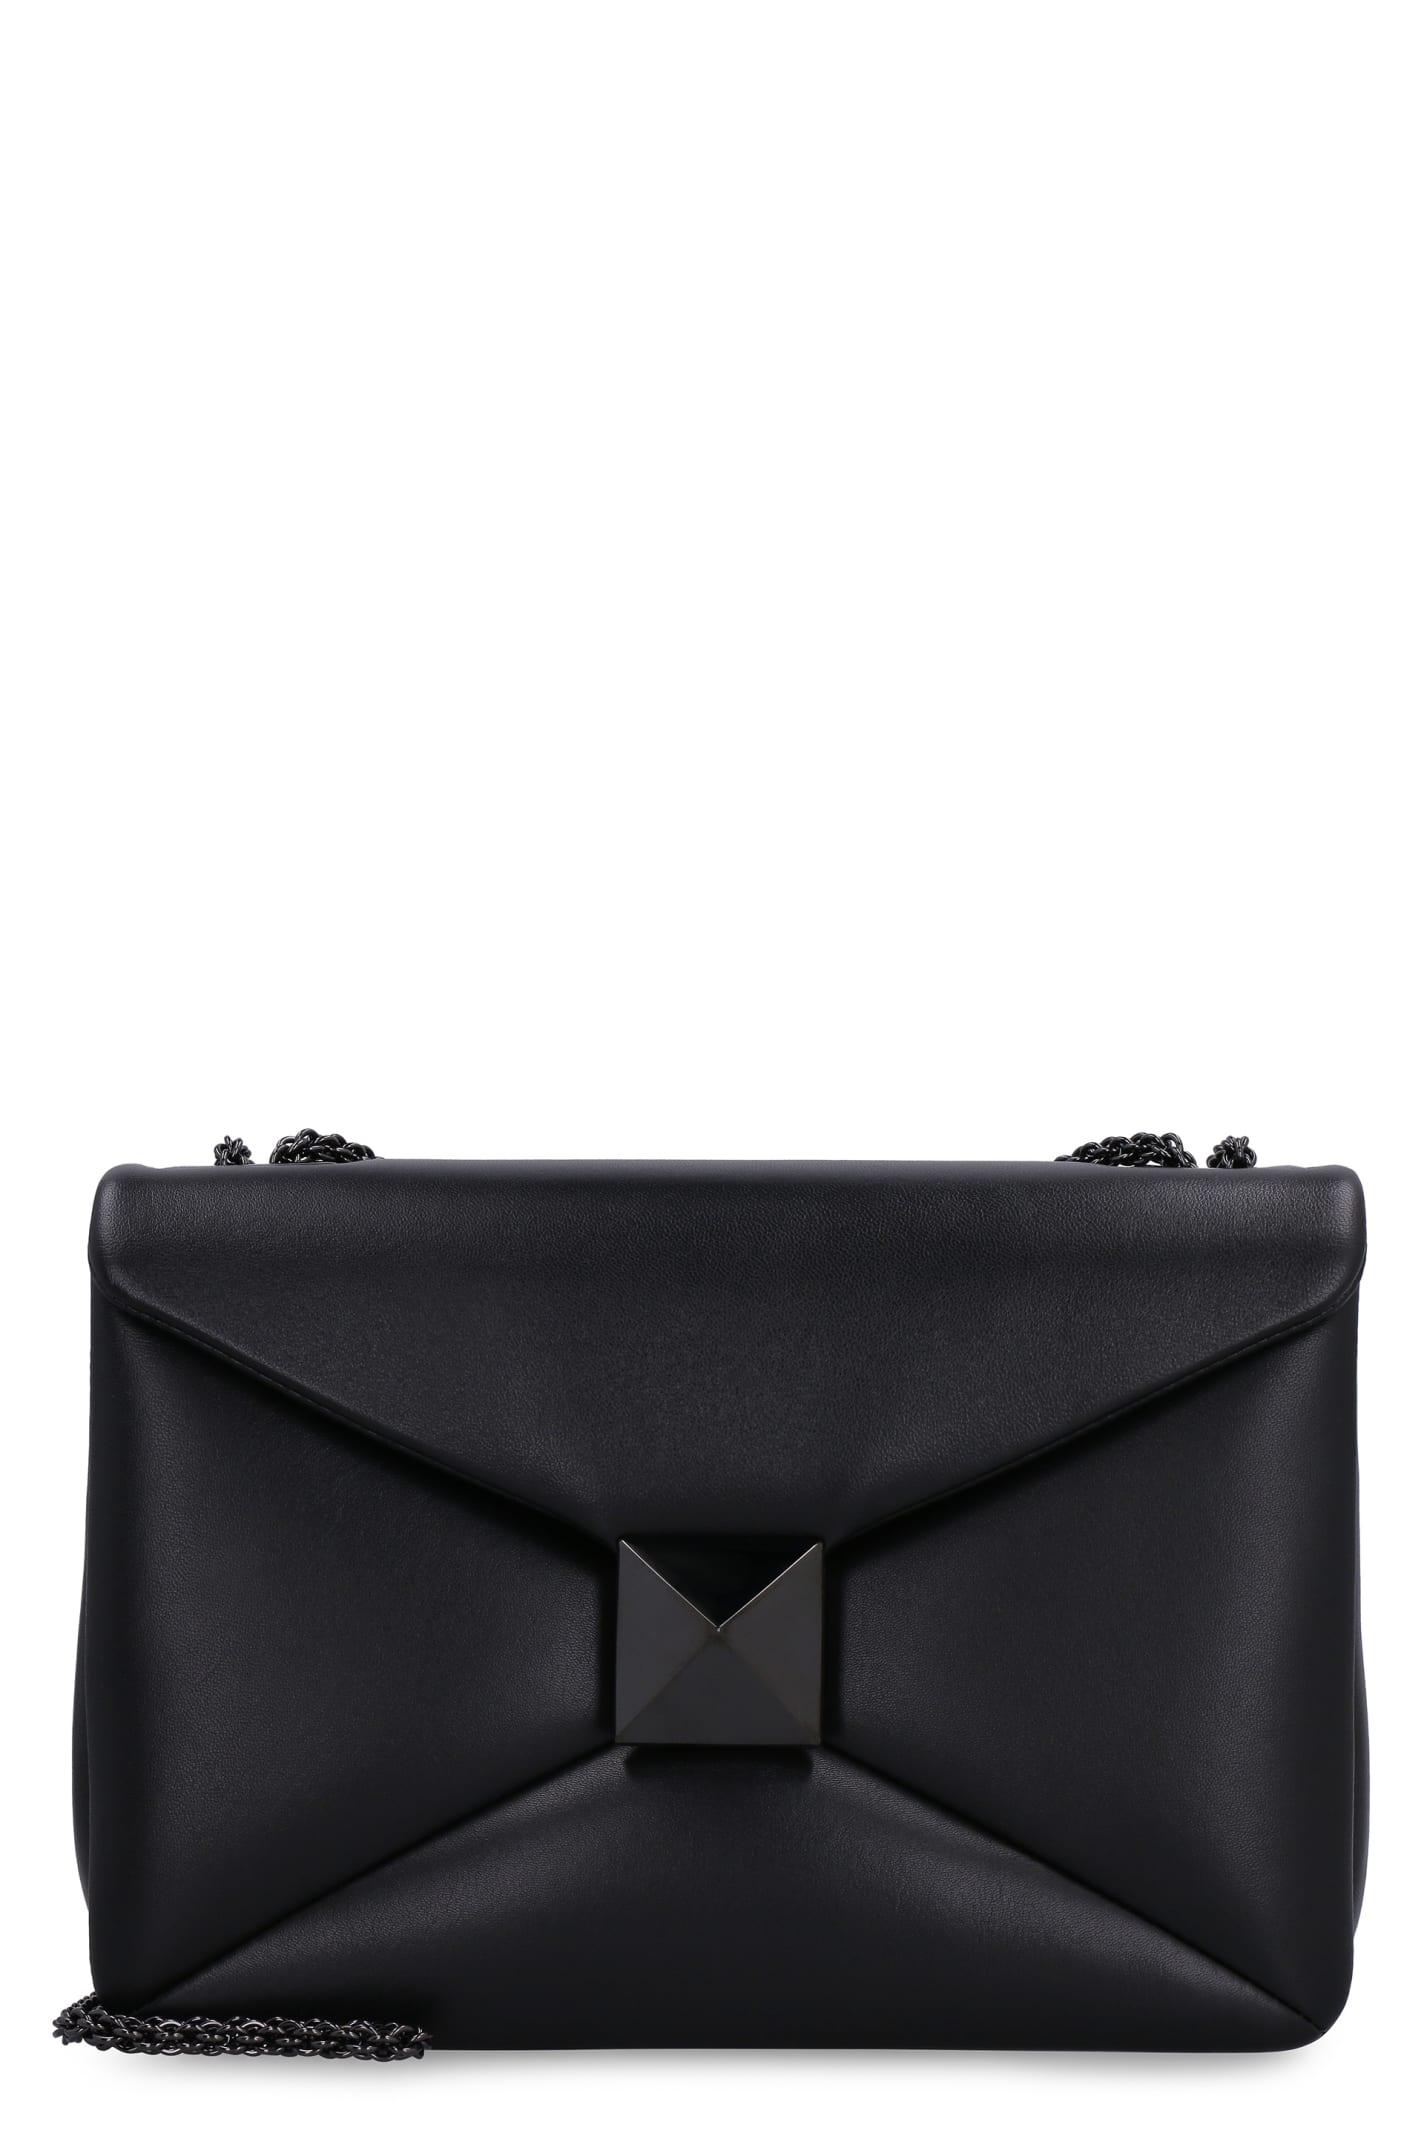 Valentino Garavani - One Stud Leather Crossbody Bag